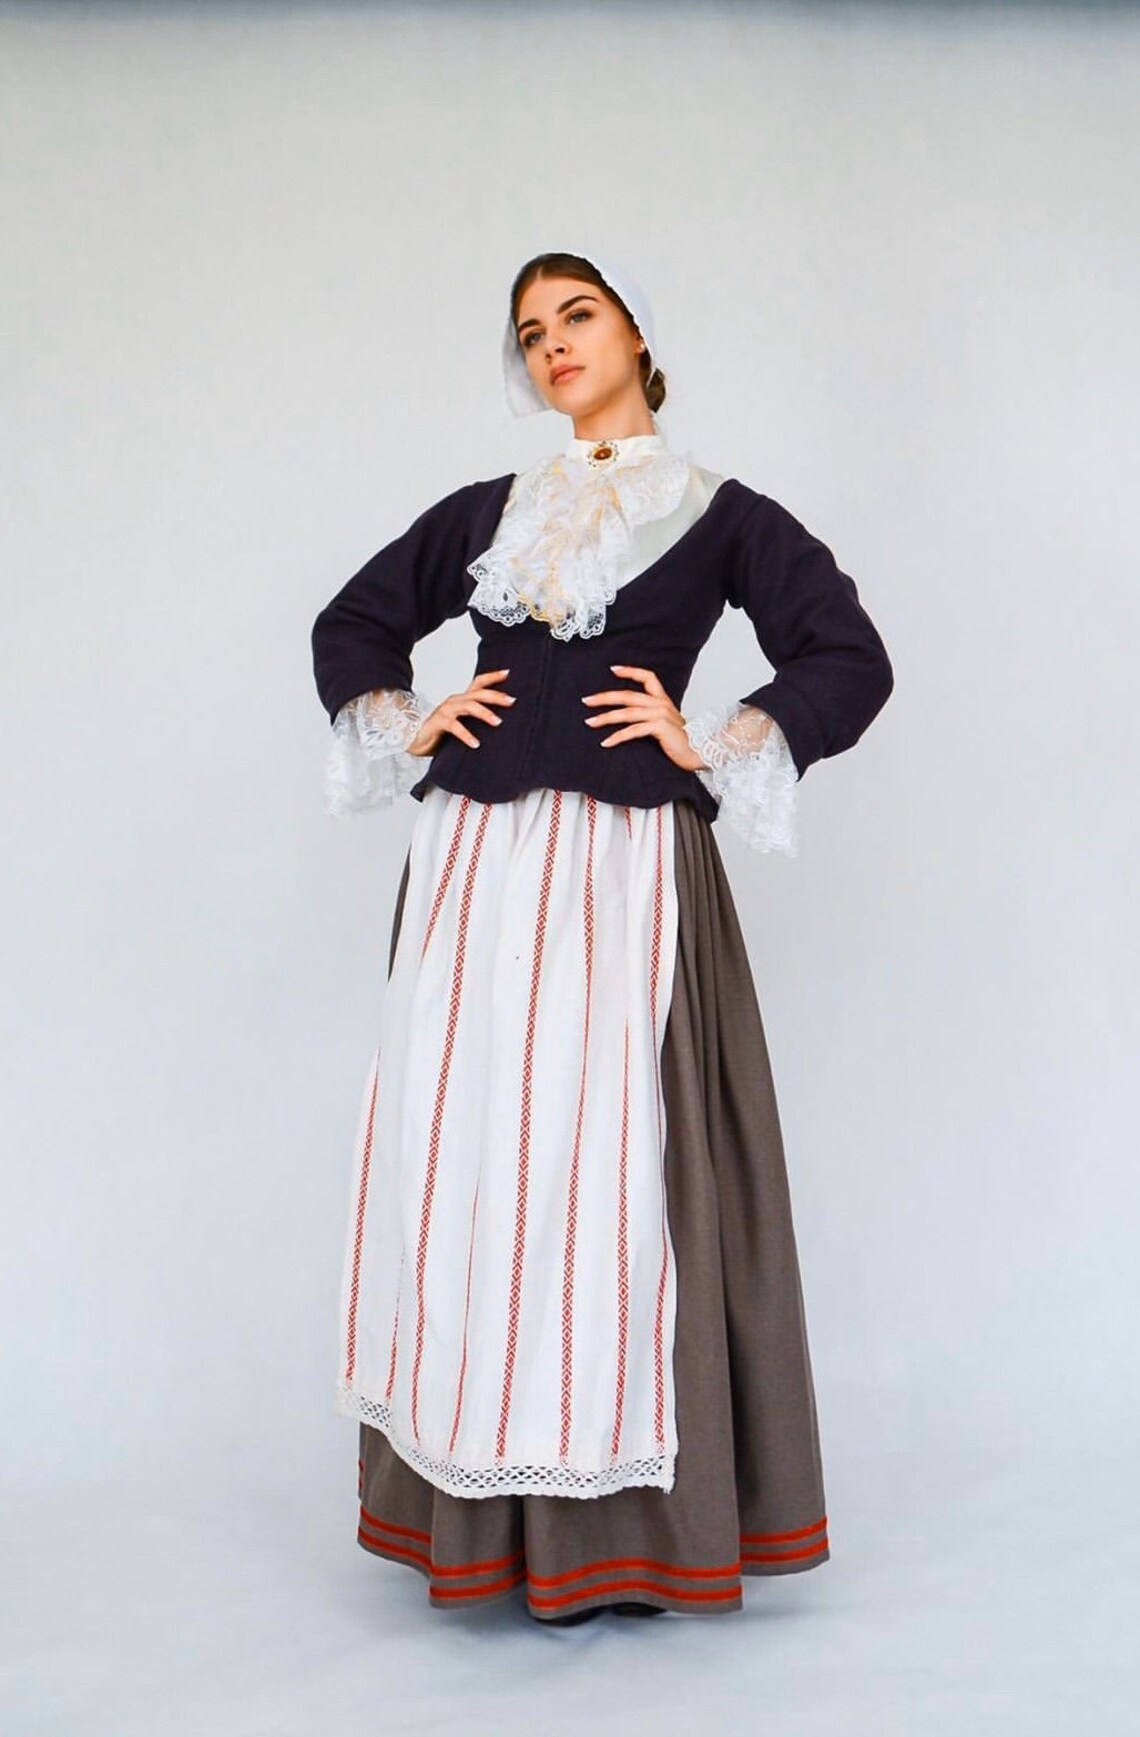 Peasant Renaissance Romantic Reenactment Medieval Dress | Etsy